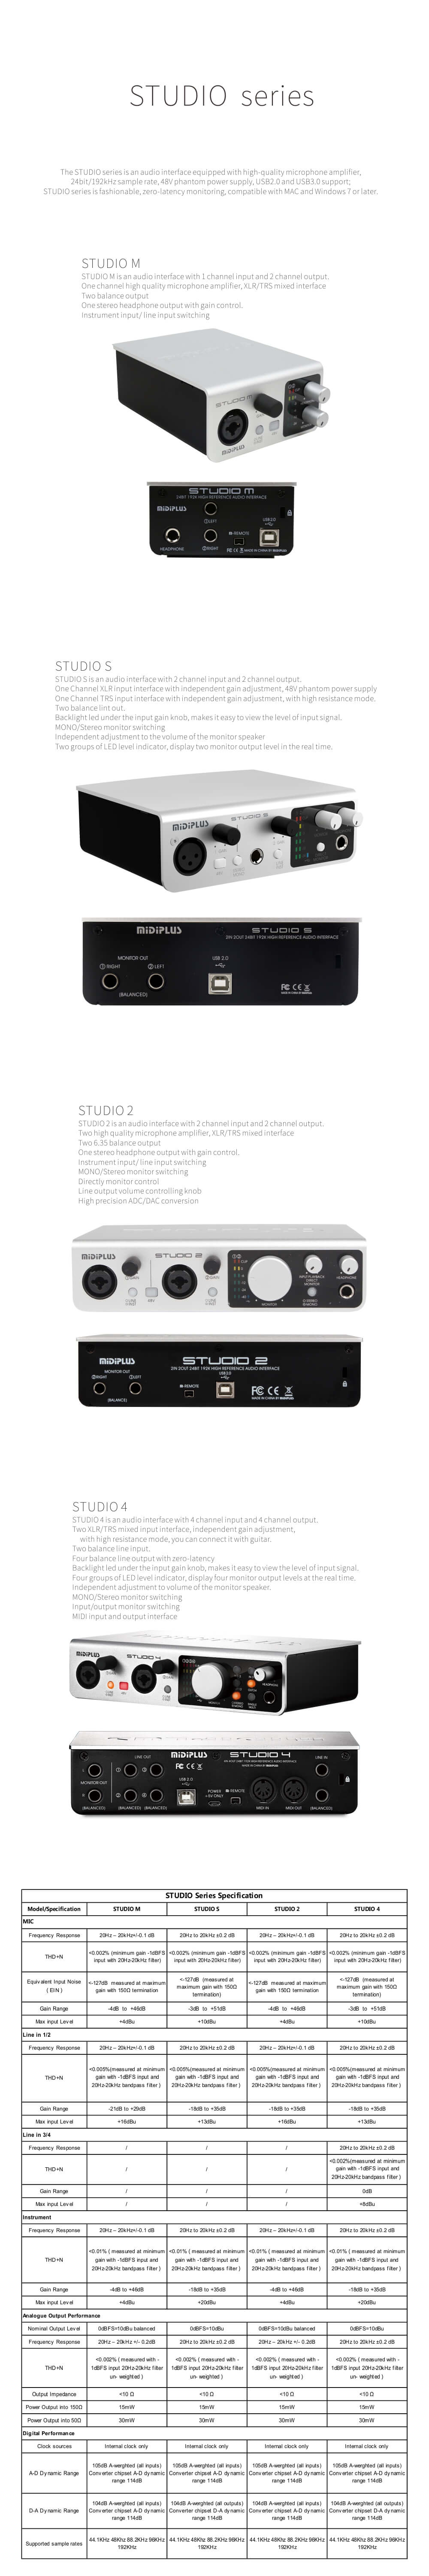 Midiplus Studio v4.82.1 全型号通用驱动 含MIX跳线面板-VST5-娱乐音频资源分享平台